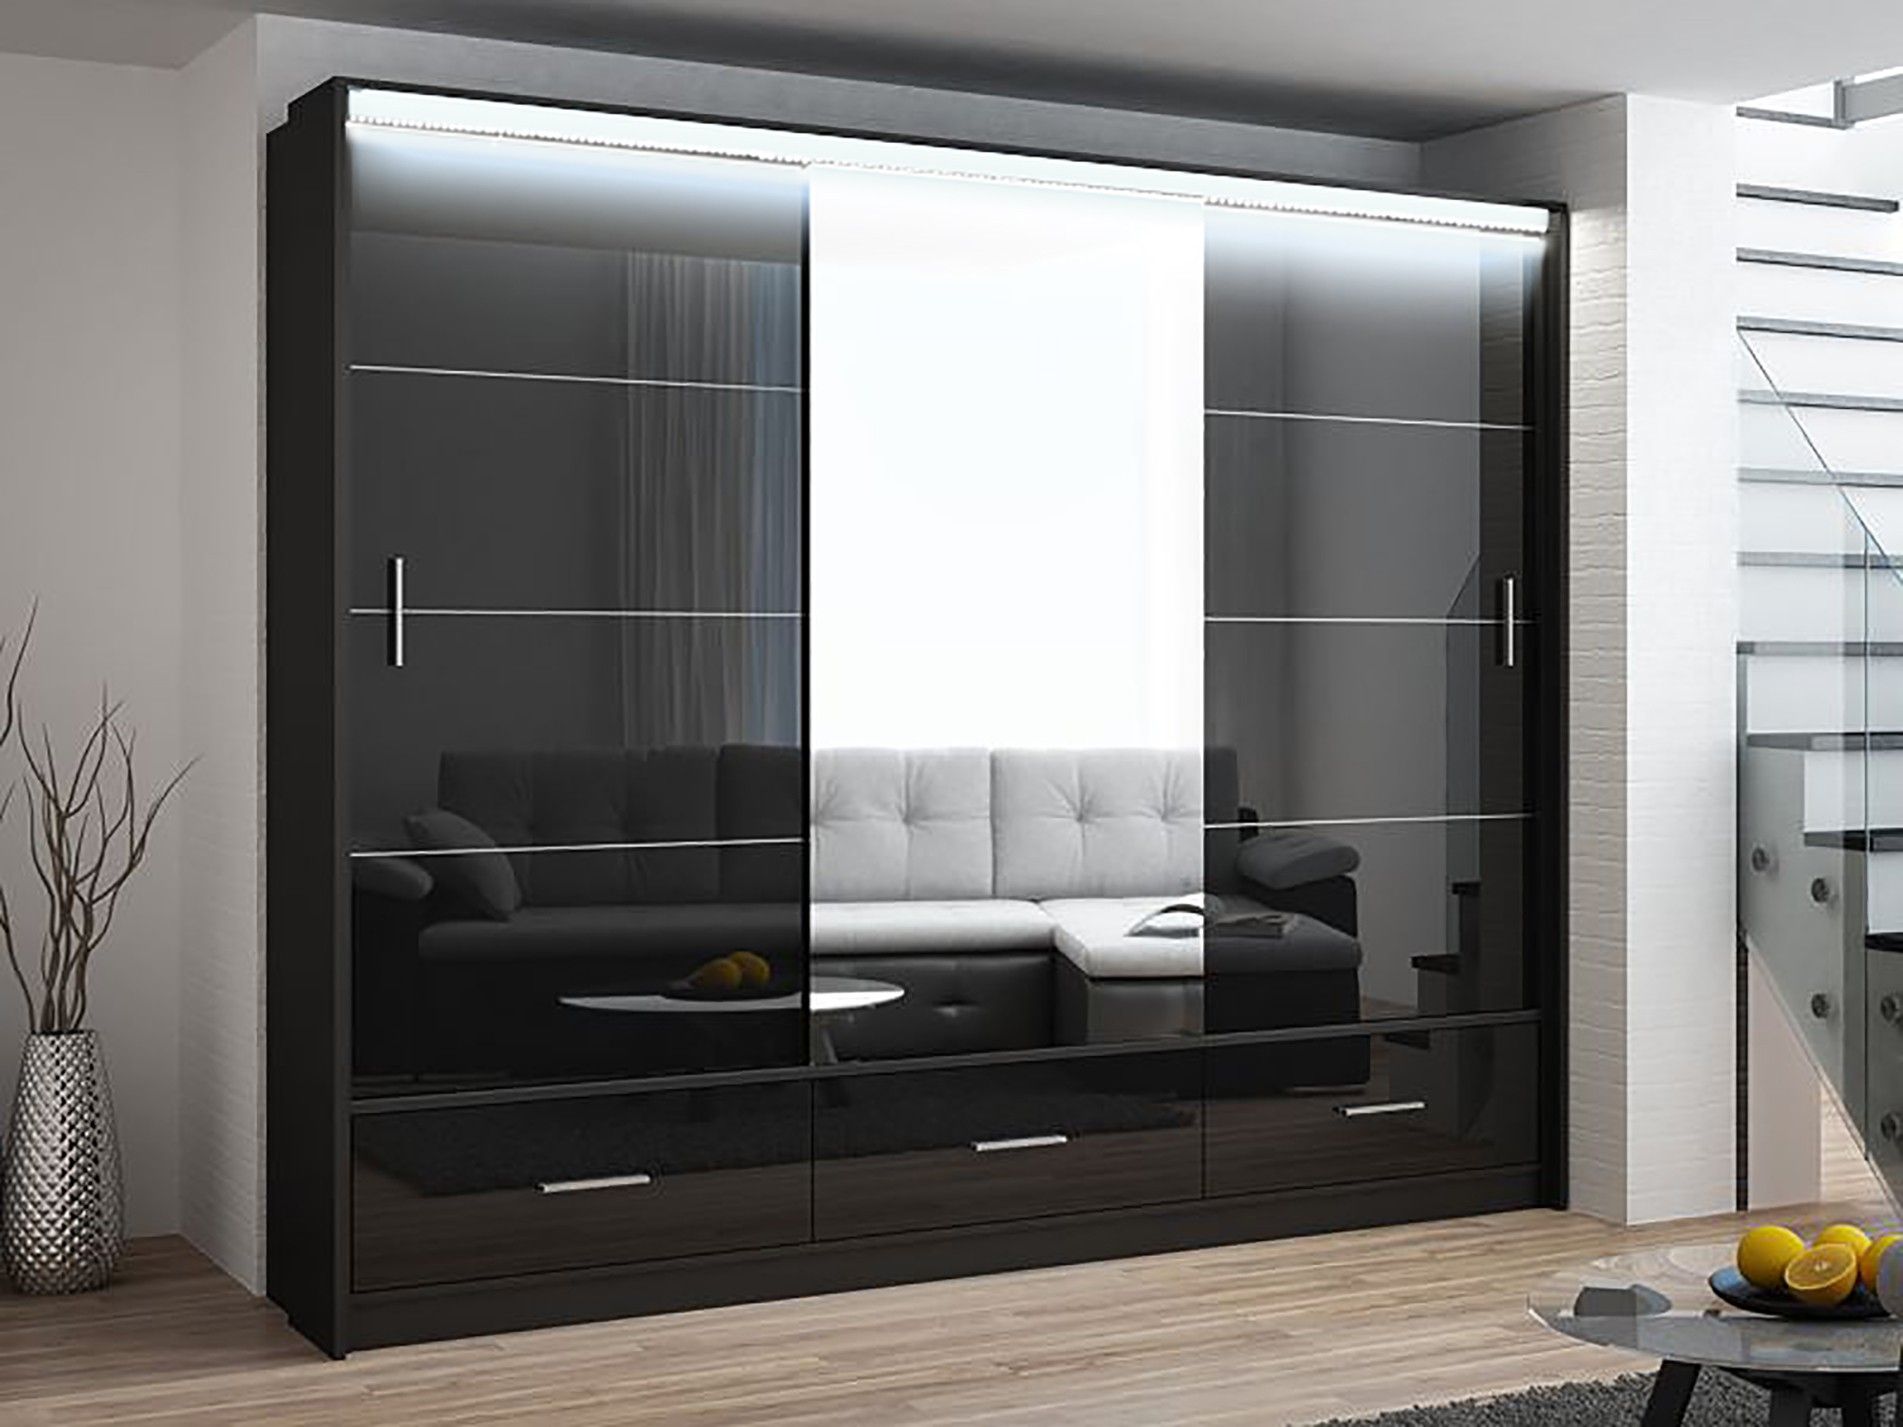 Marsylia Wardrobe, Black Gloss + Mirror 255cm ,hull Furniture Regarding High Gloss Black Wardrobes (View 8 of 15)